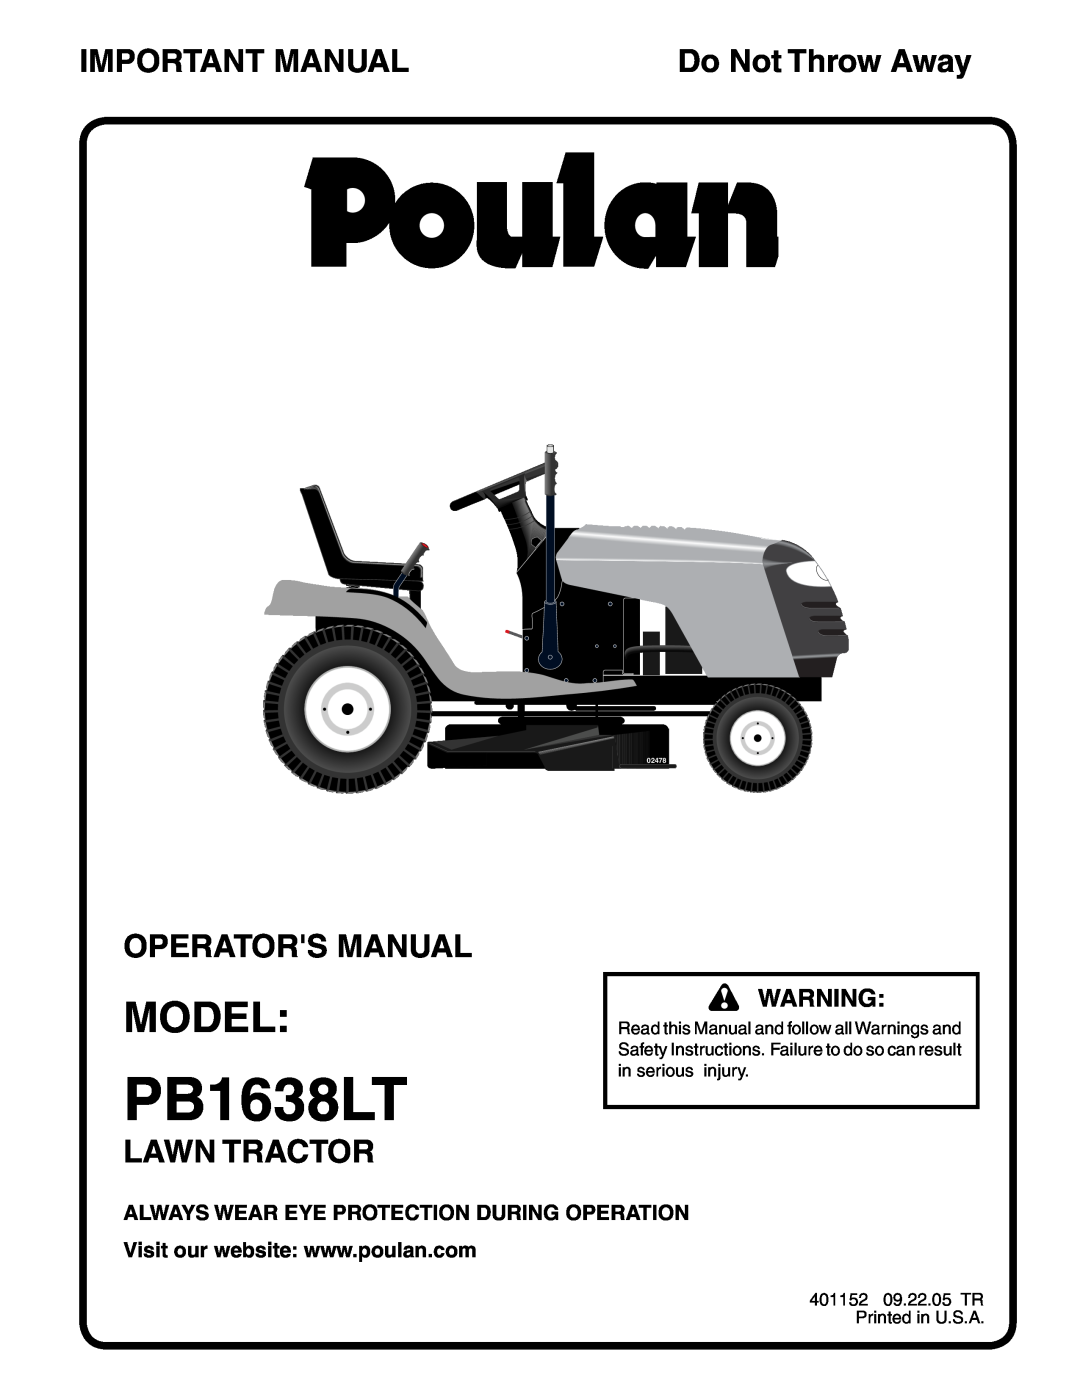 Poulan PB1638LT manual Model, Important Manual, Operators Manual, Lawn Tractor, Do Not Throw Away, 02478 